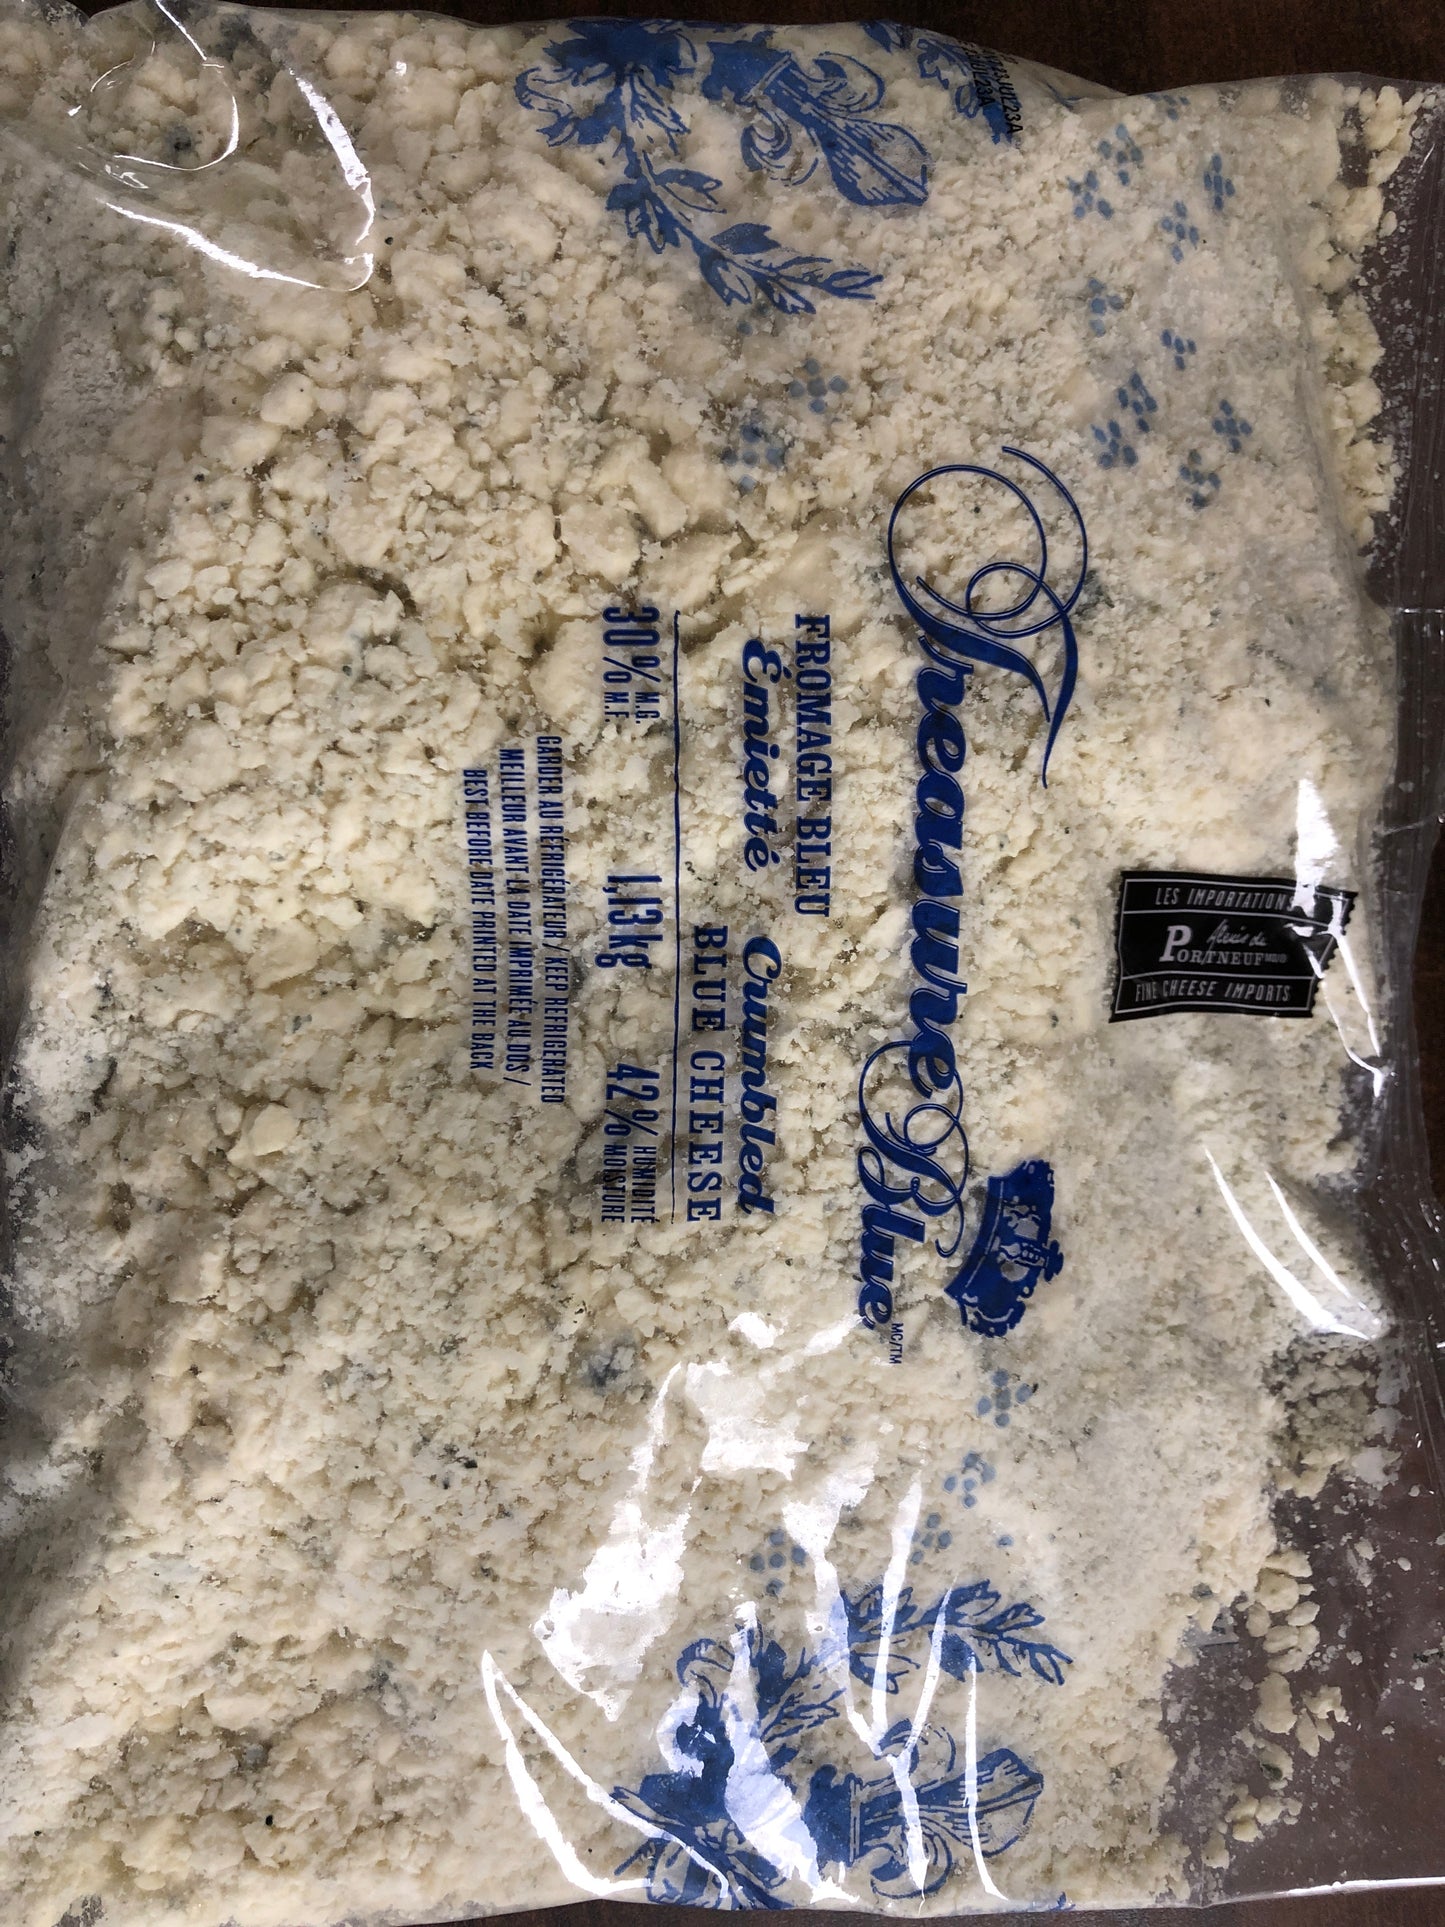 Blue cheese crumbled, 1.13kg